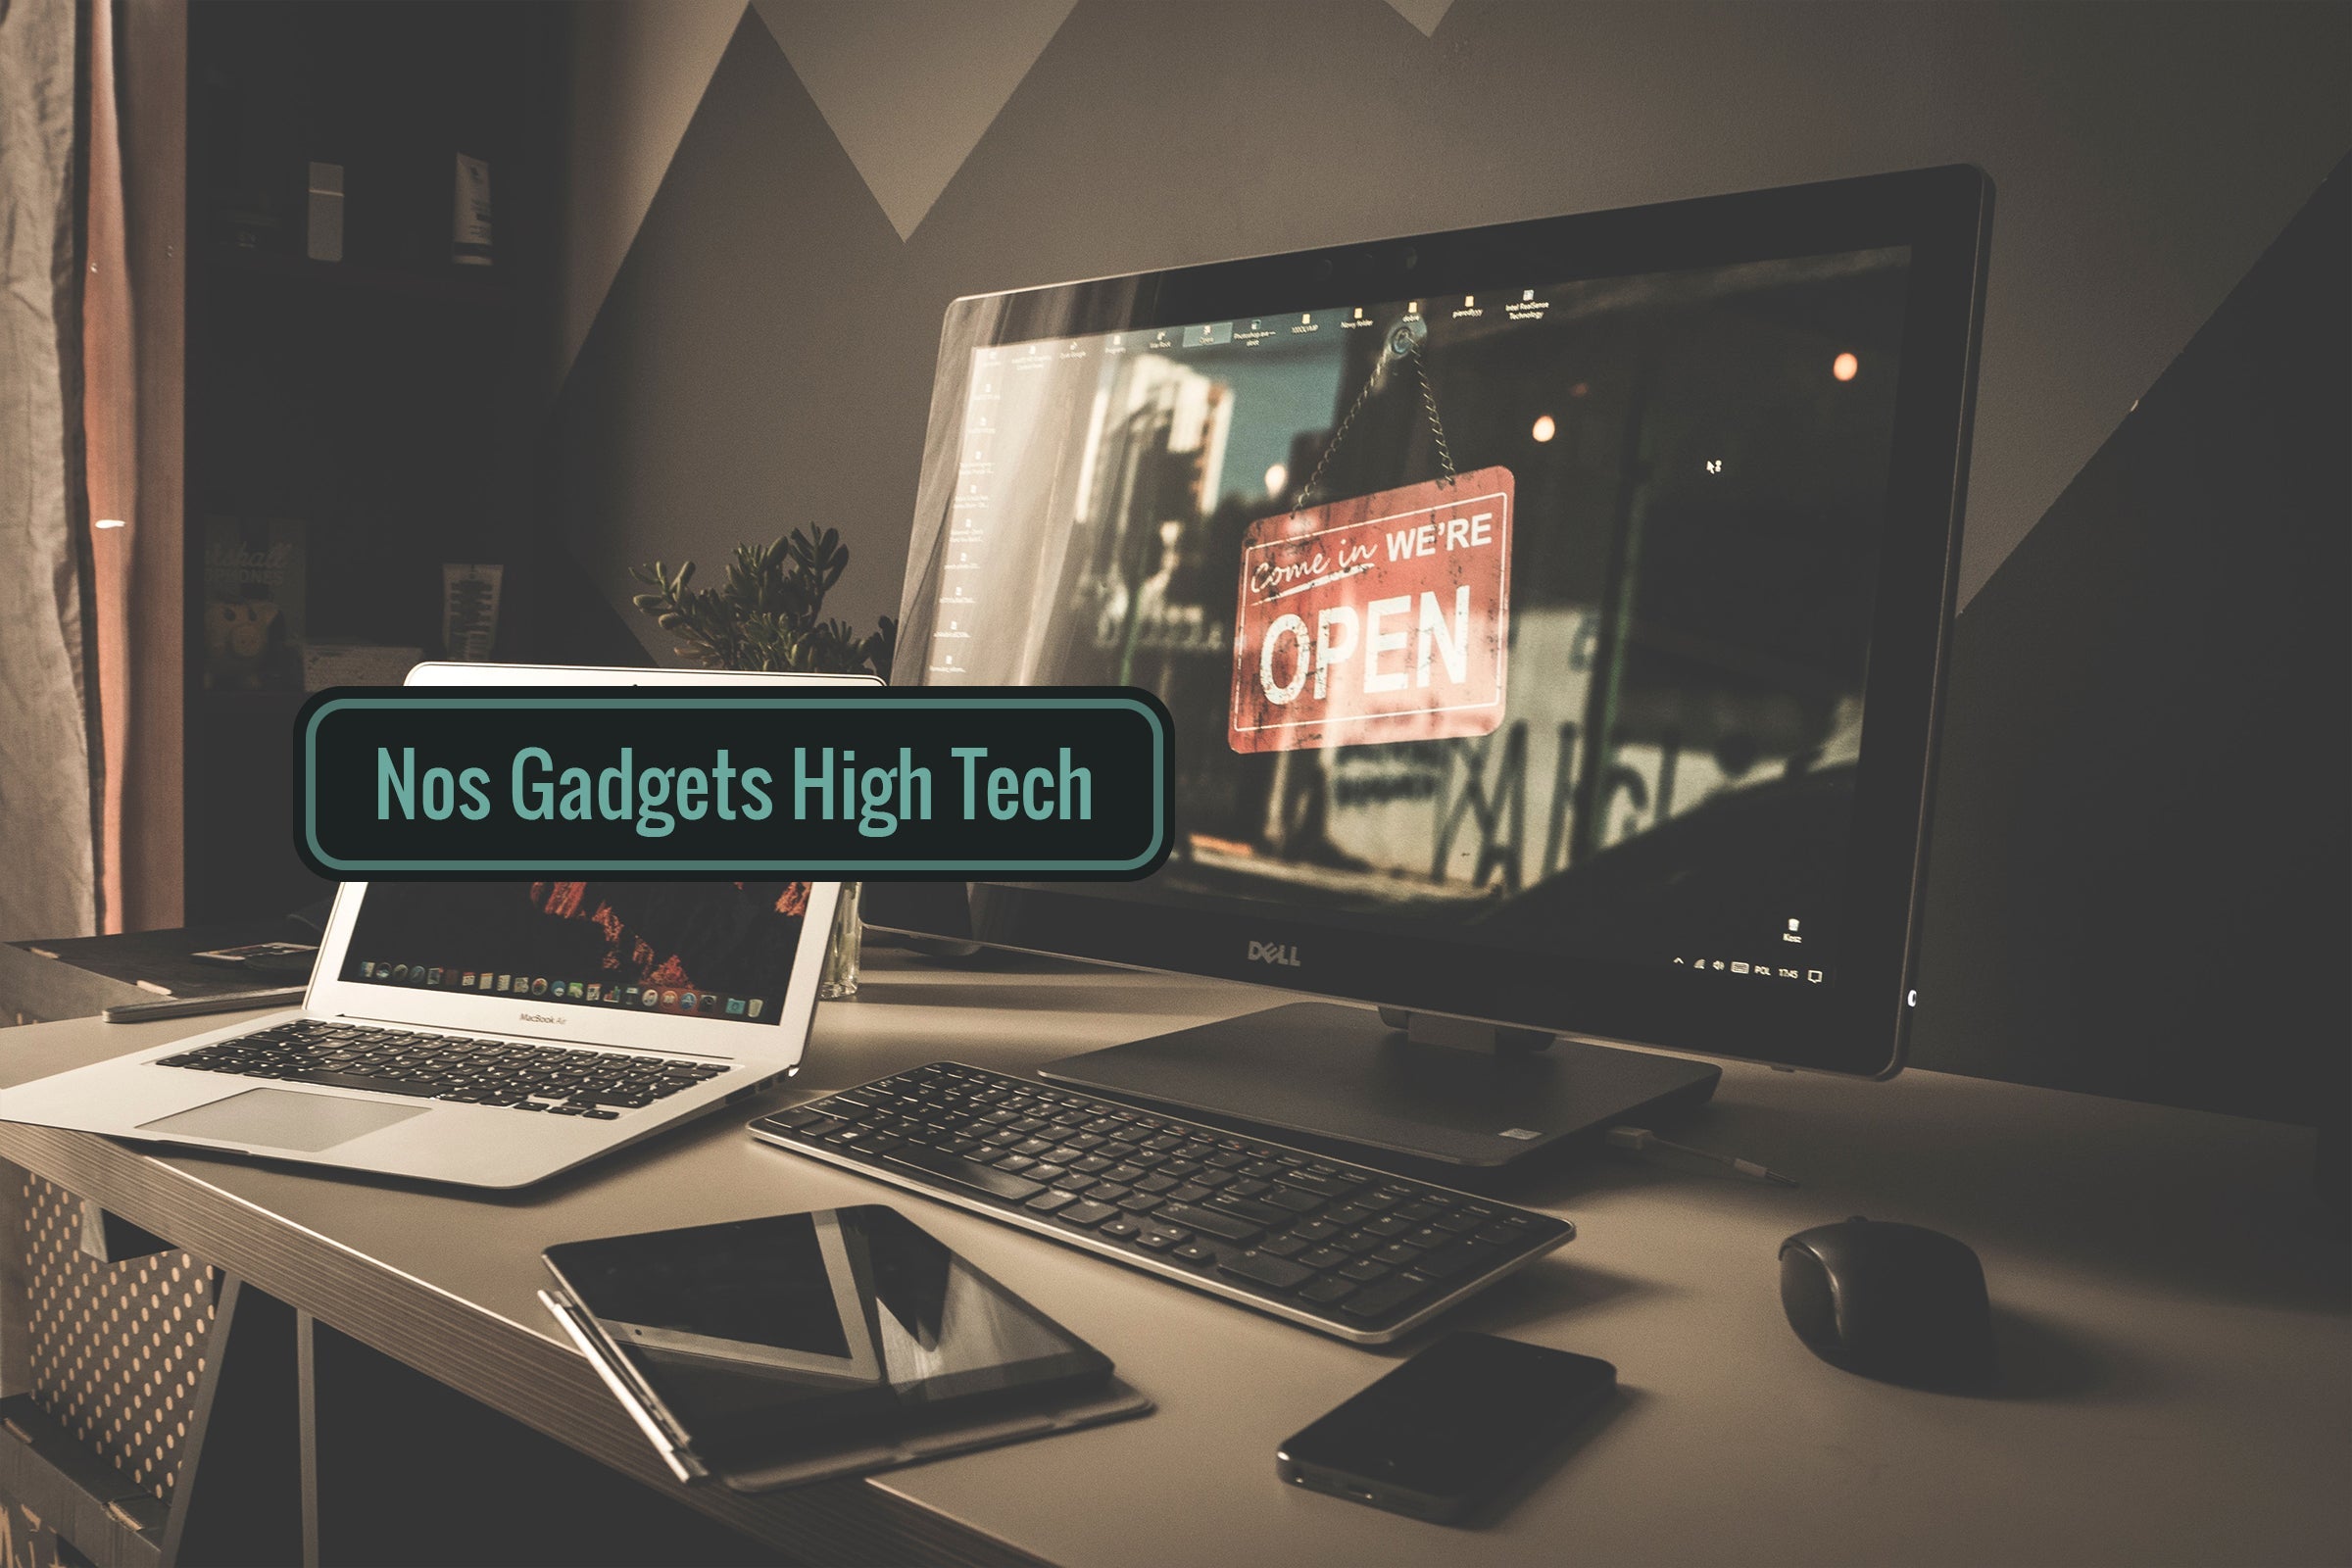 Gadgets High tech – Gadget-In-Utile